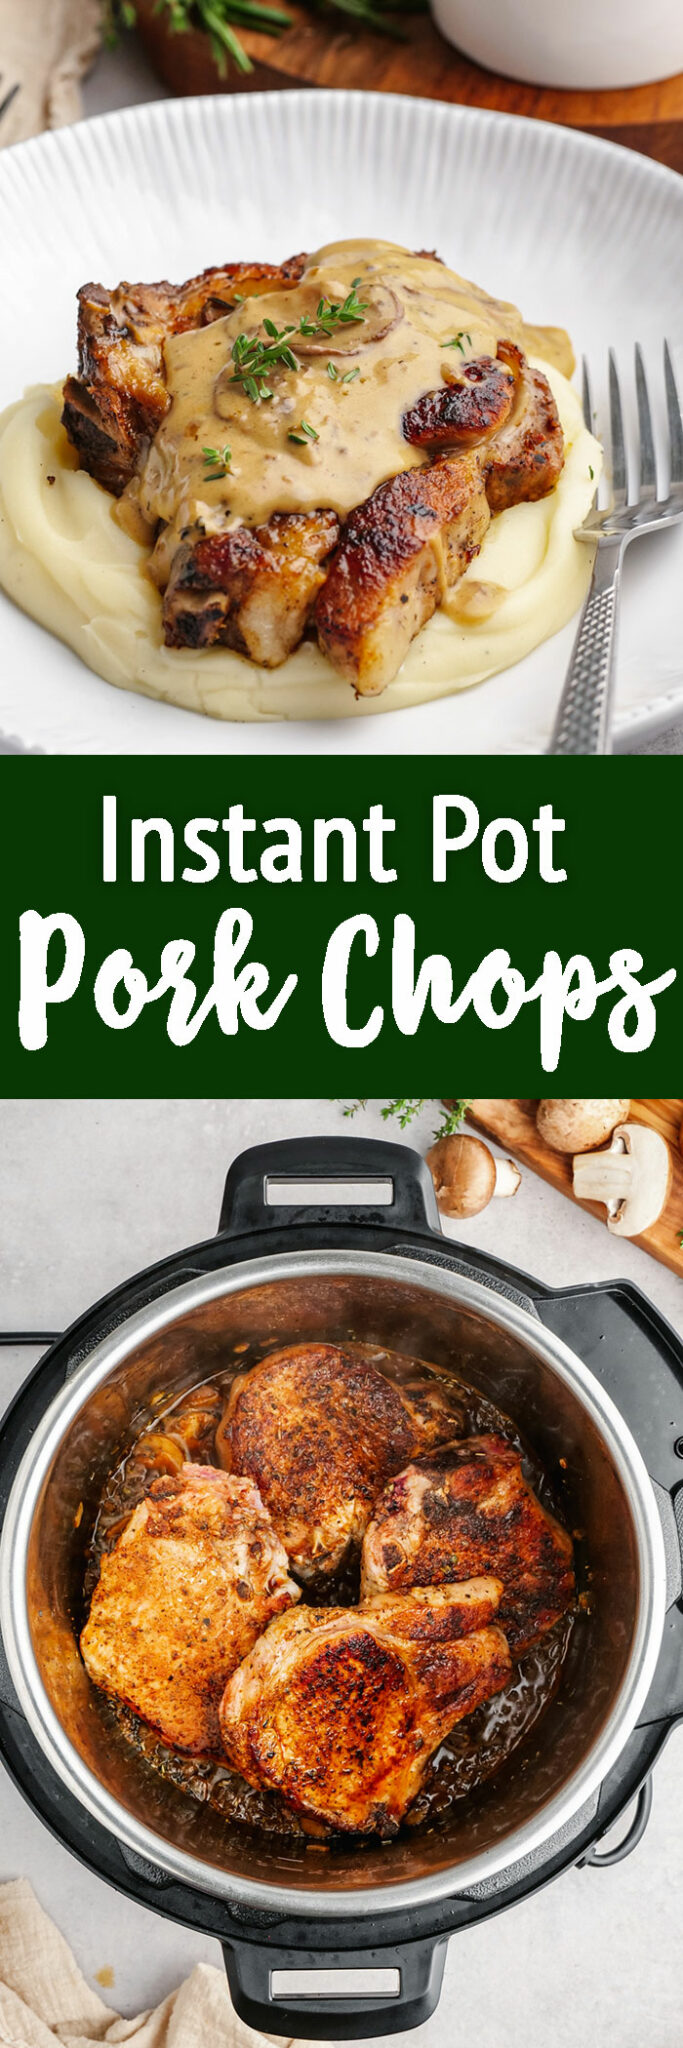 Instant Pot Pork Chops - Easy Peasy Meals